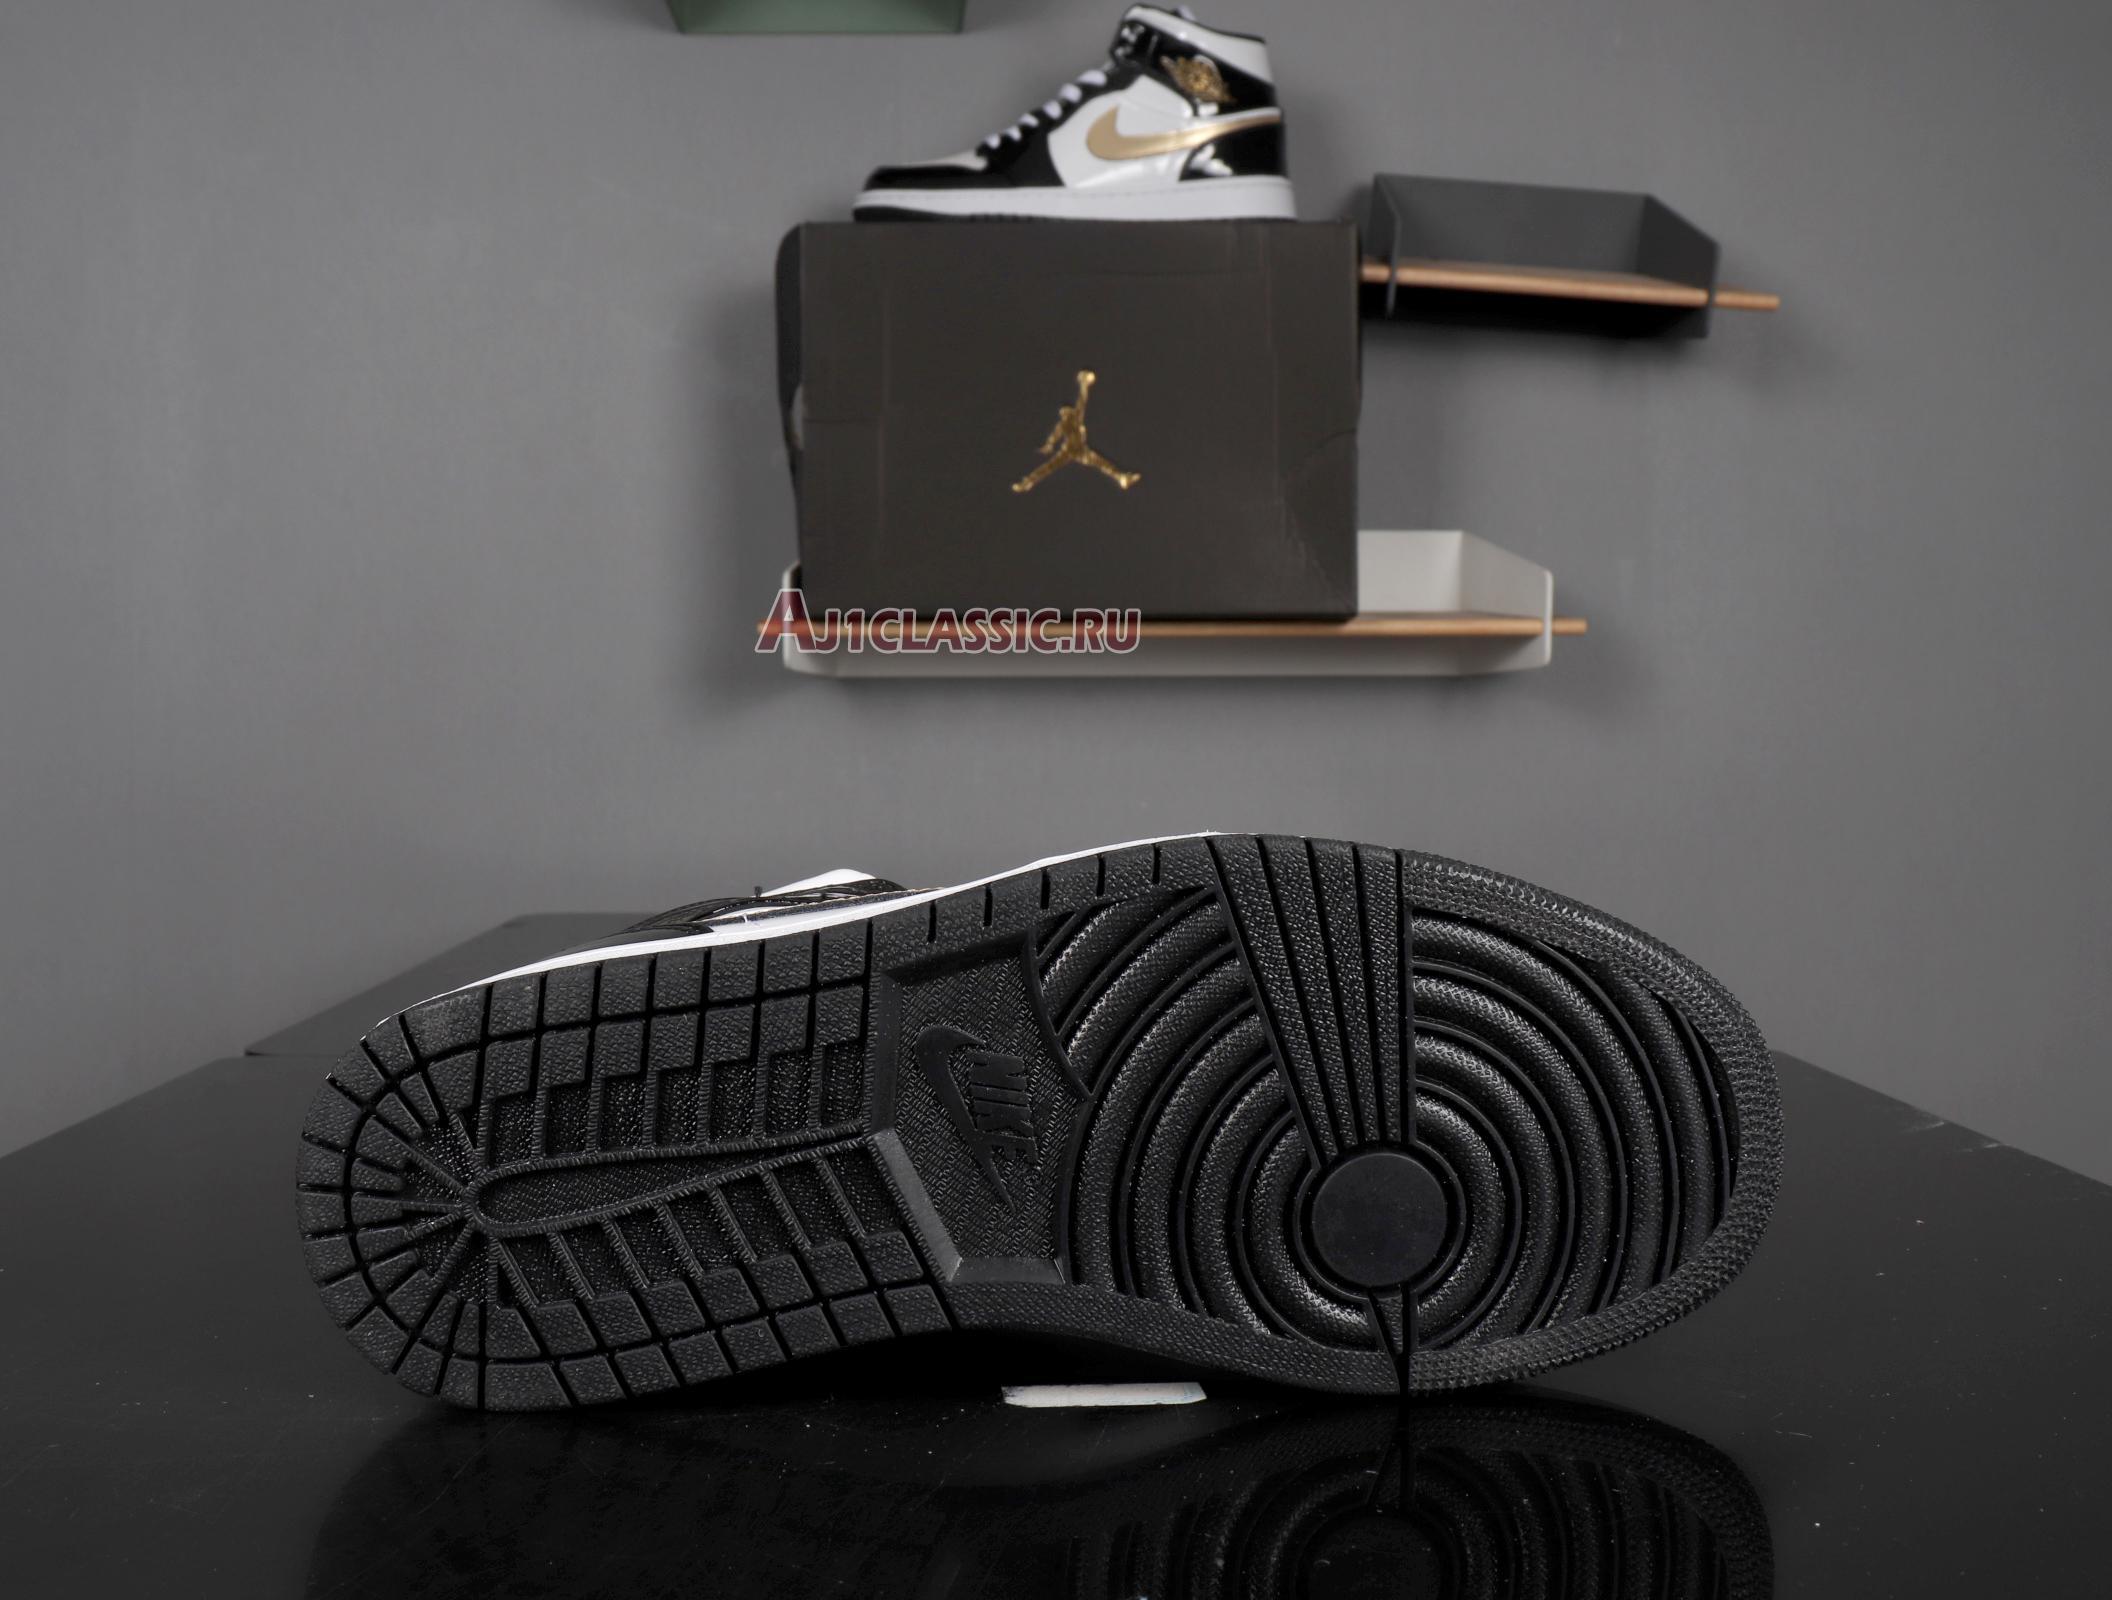 Air Jordan 1 Mid Patent "Black Gold" 852542-007